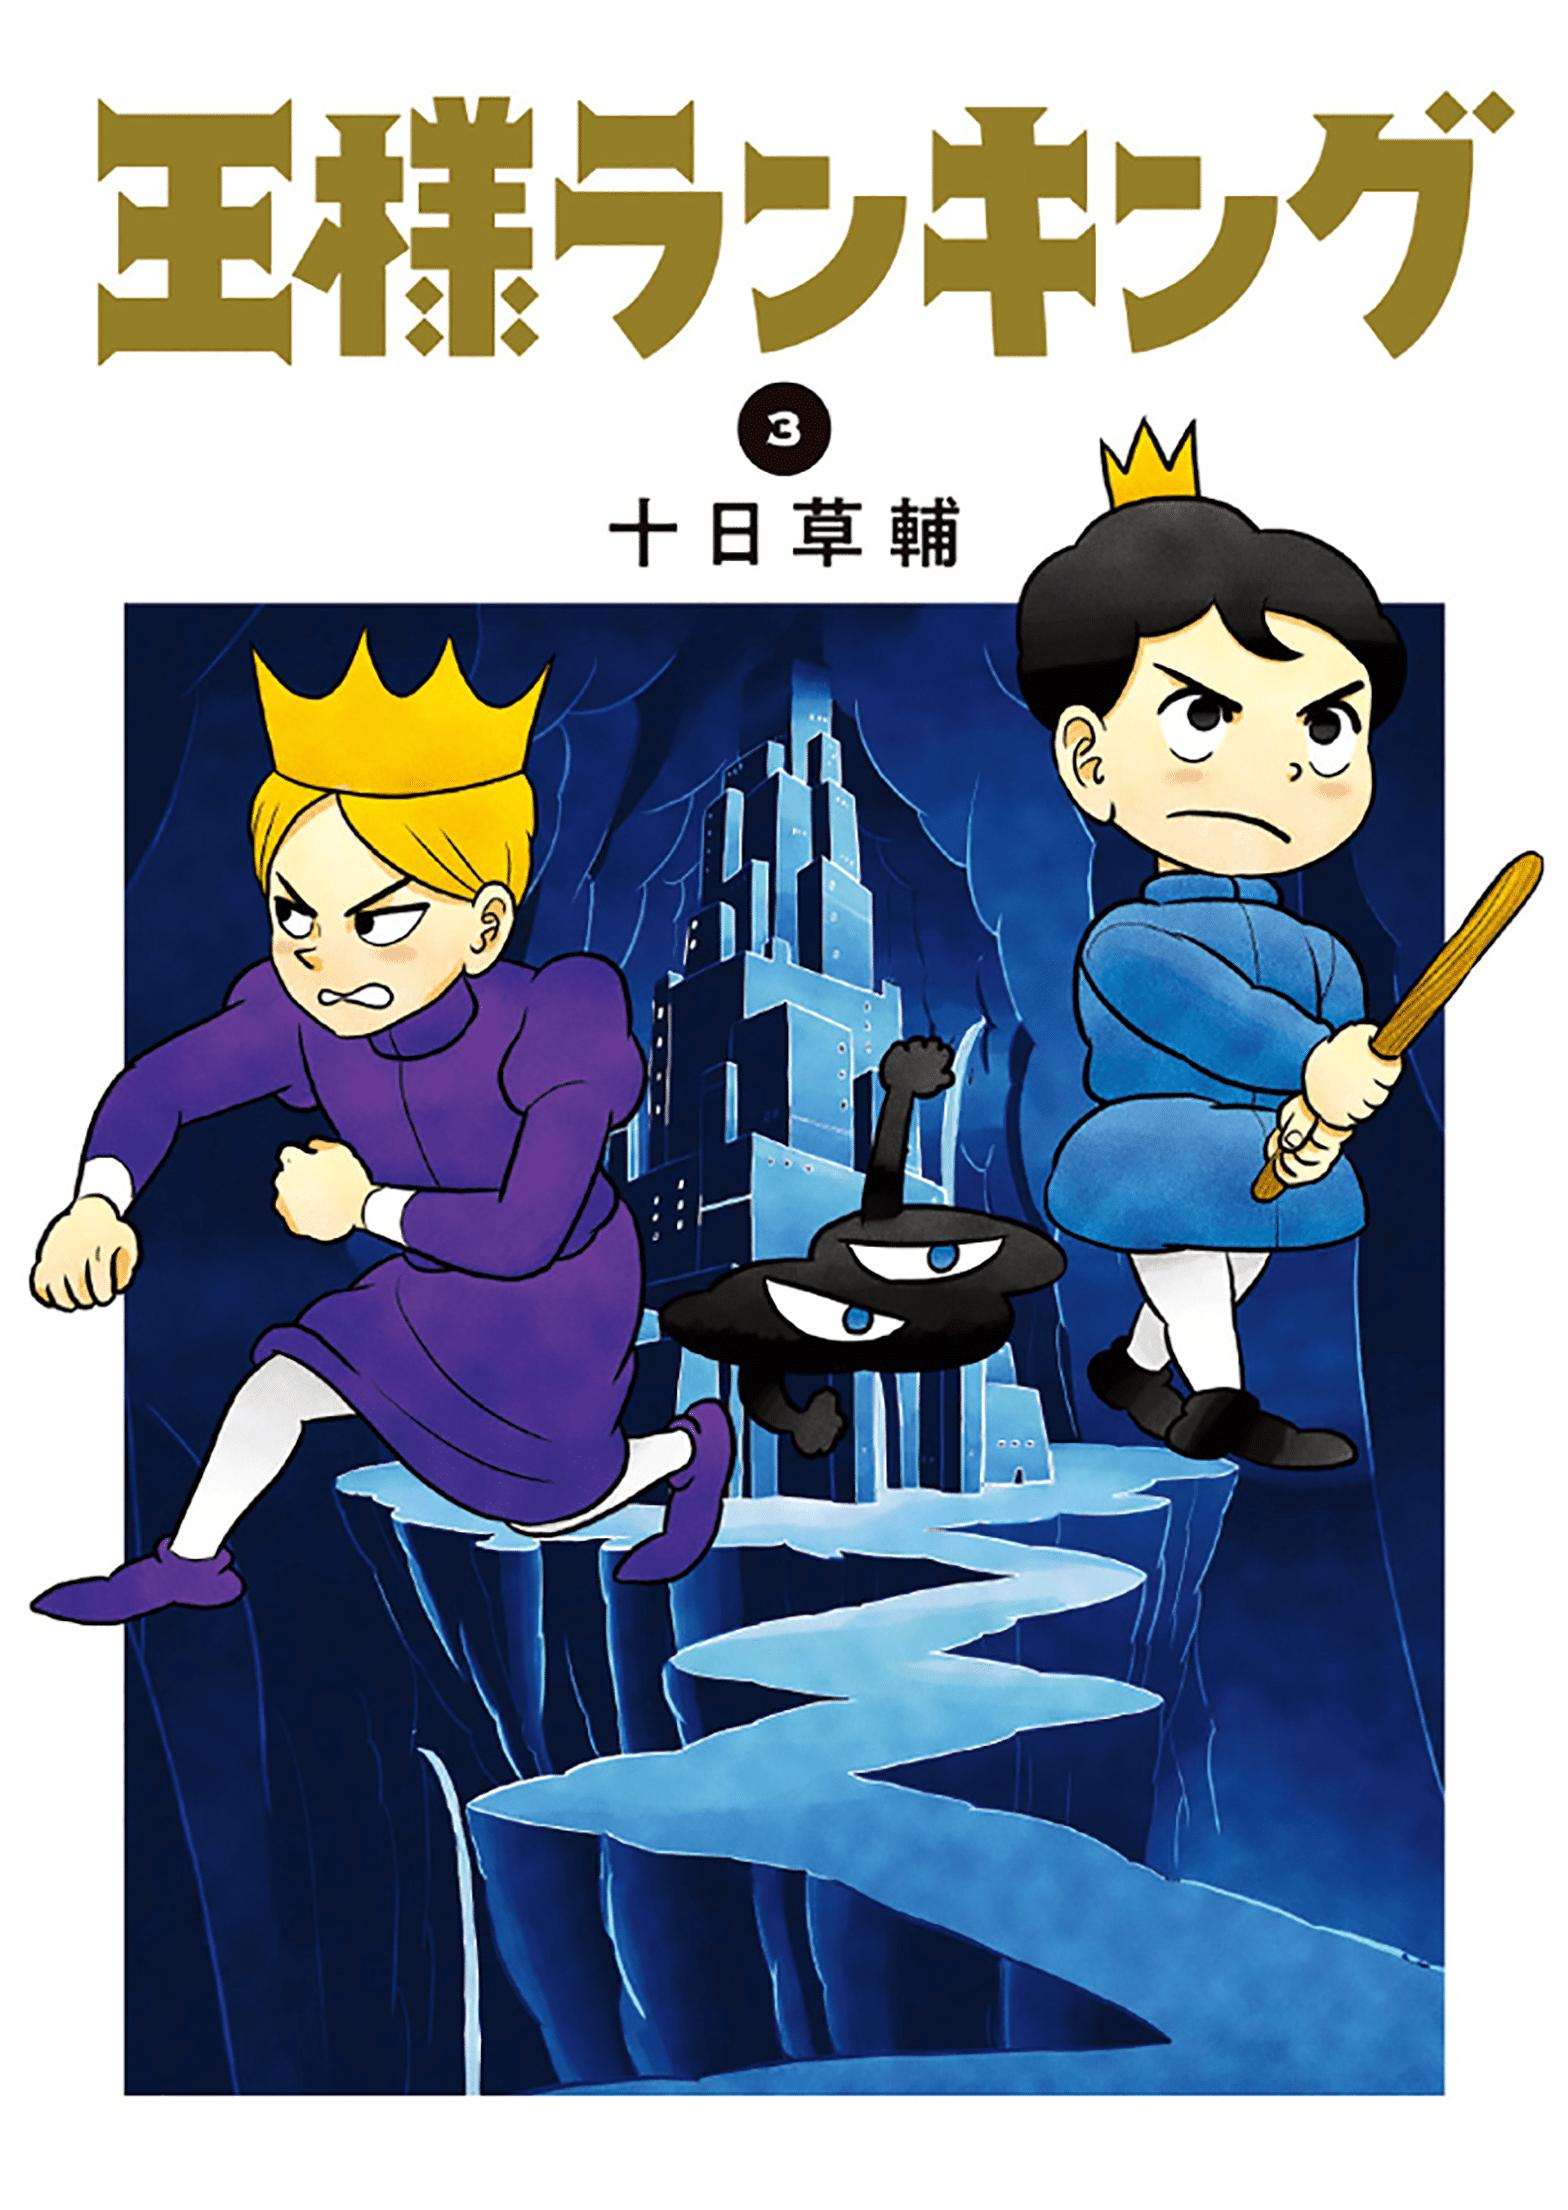 Ranking of Kings, Chapter 158 - Ranking of Kings Manga Online